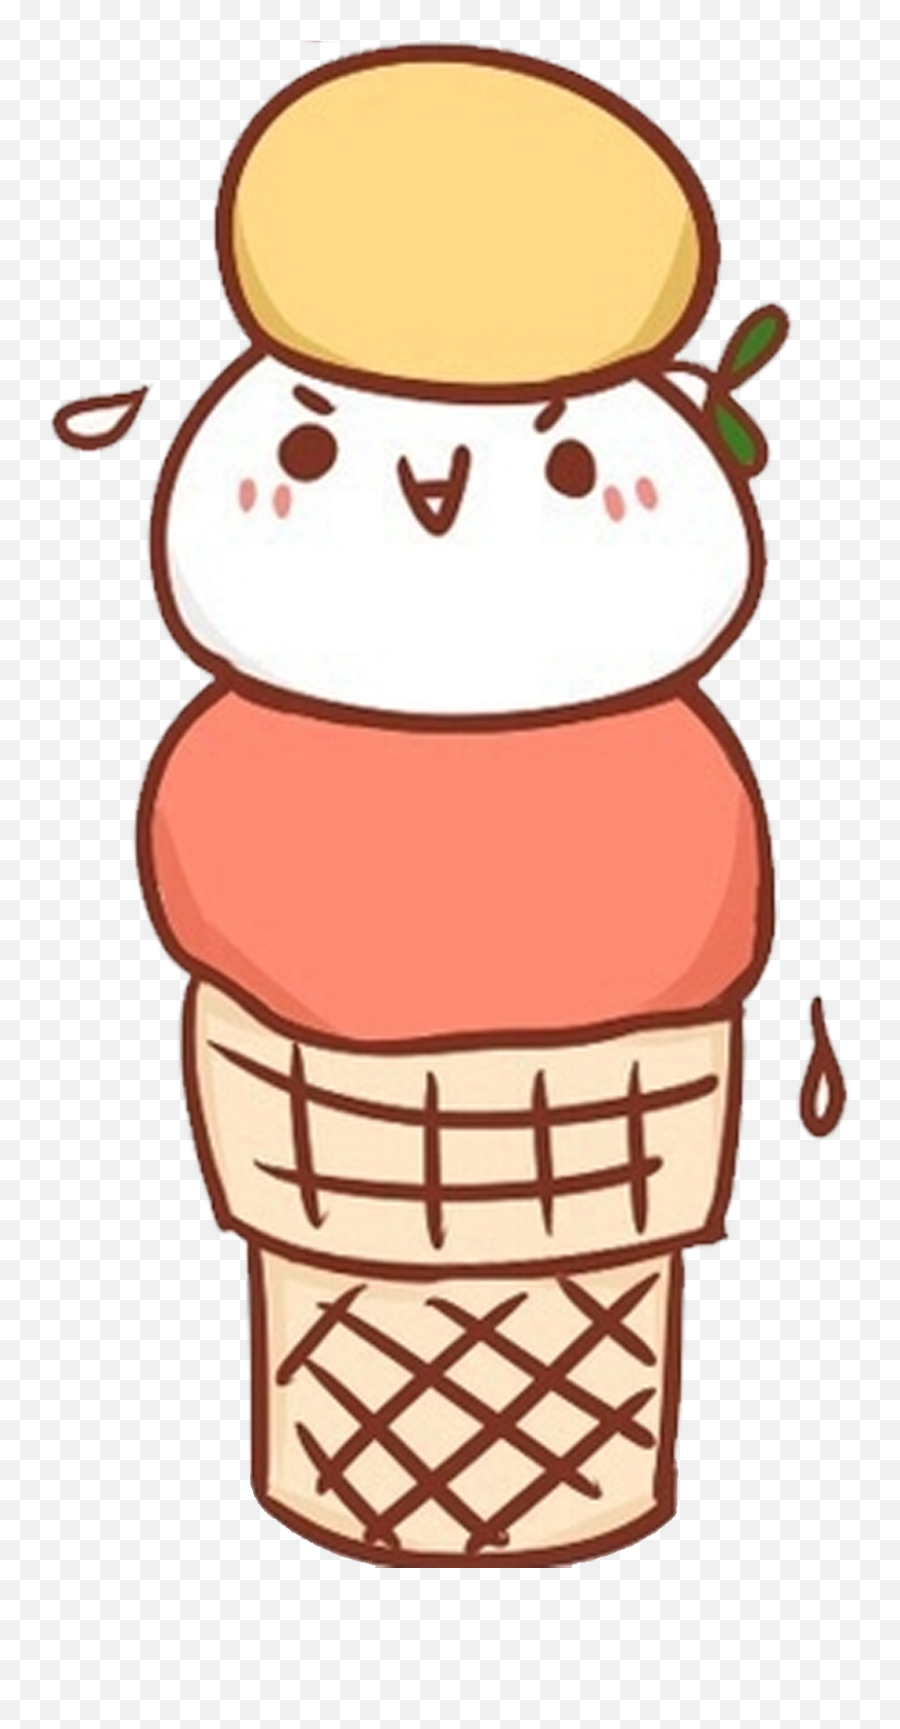 Mochi Ice Cream Mochi Ice Cream Ice Cream Cartoon Ice Cream - Japanese Ice Cream Cartoon Emoji,Cake Flan Ice Cream Emoji